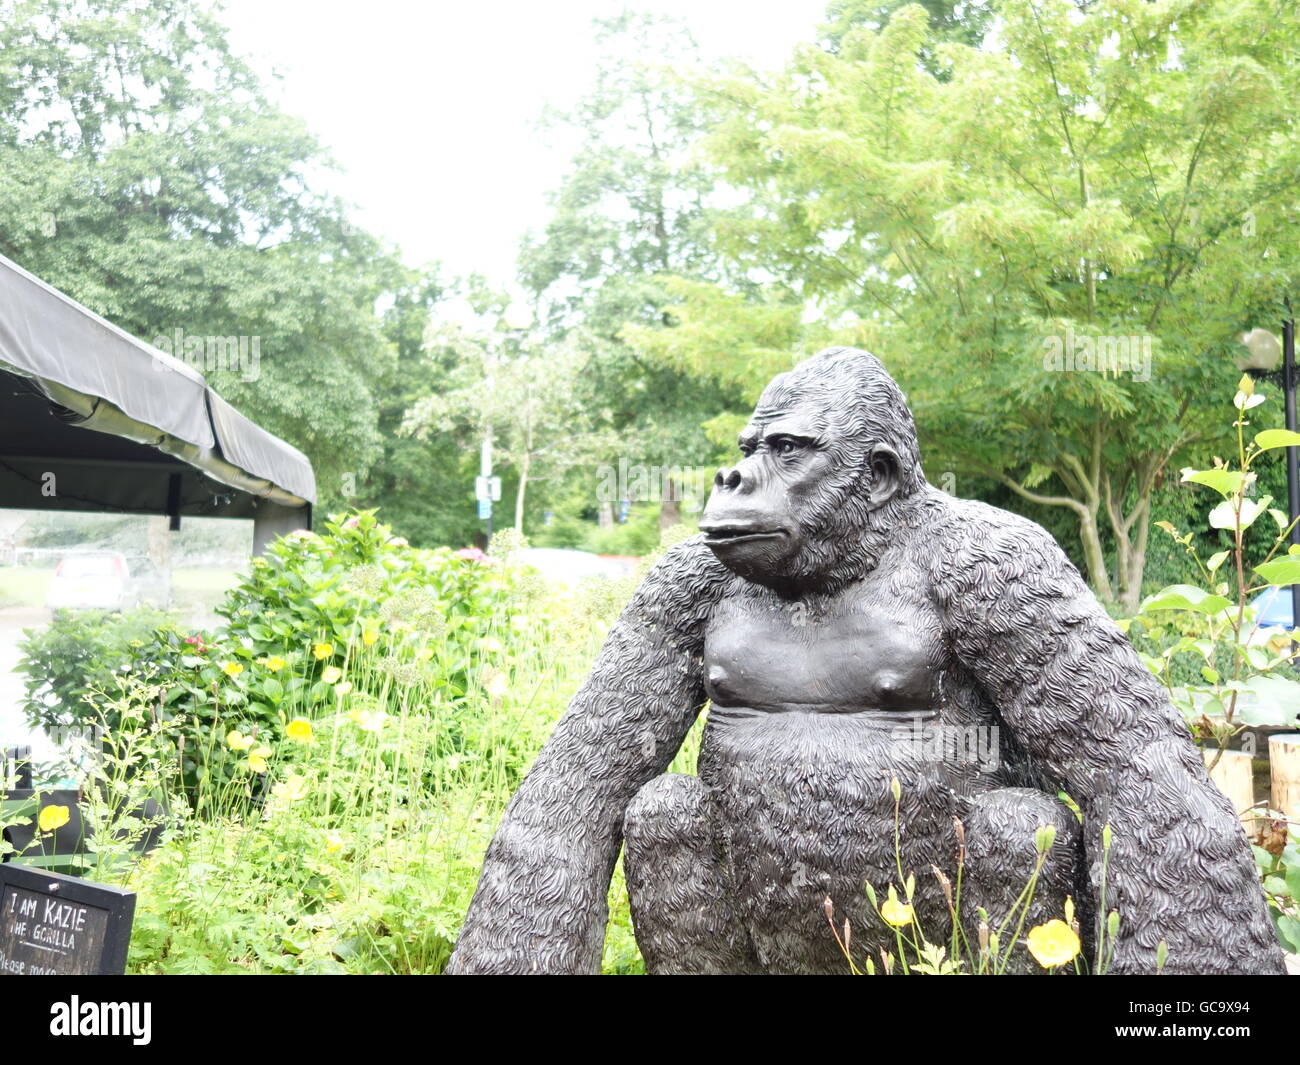 A Gorilla Statue hidden in the bushes Stock Photo - Alamy